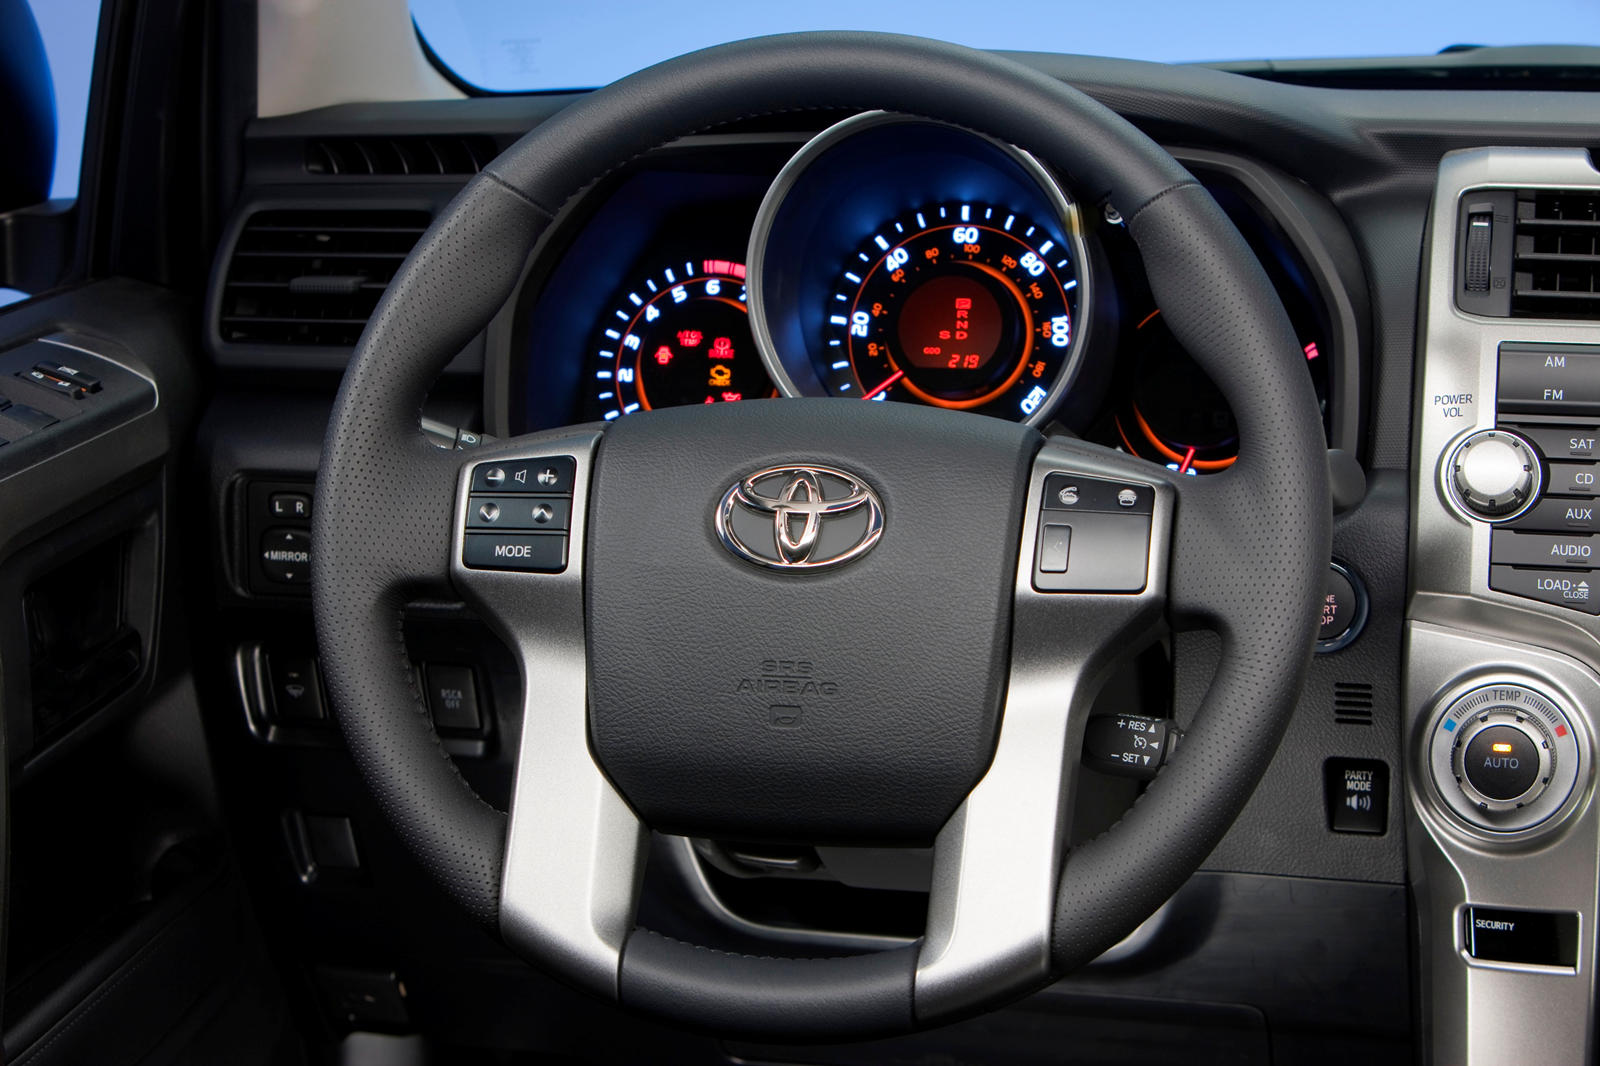 2013 Toyota 4Runner 33 Interior Photos  US News